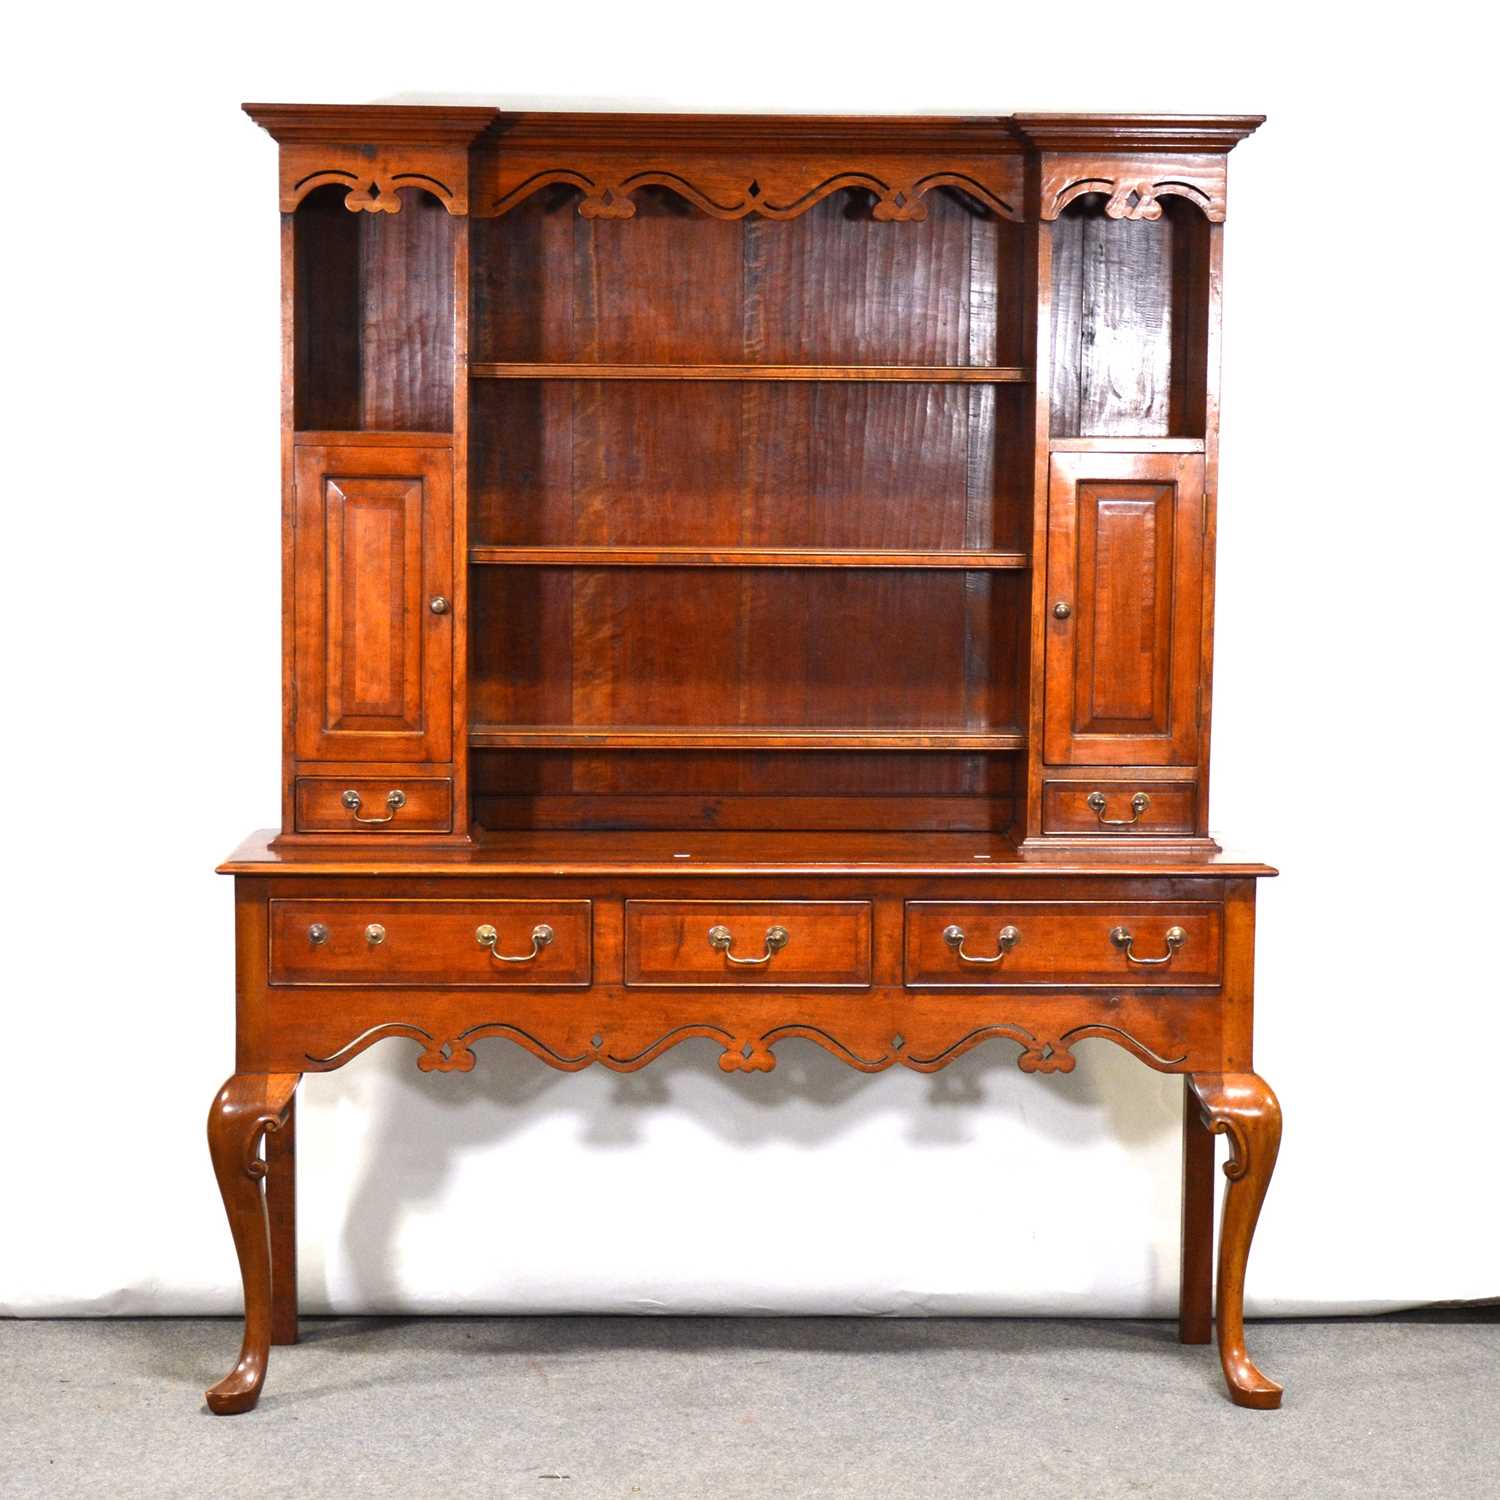 18th century style Welsh dresser